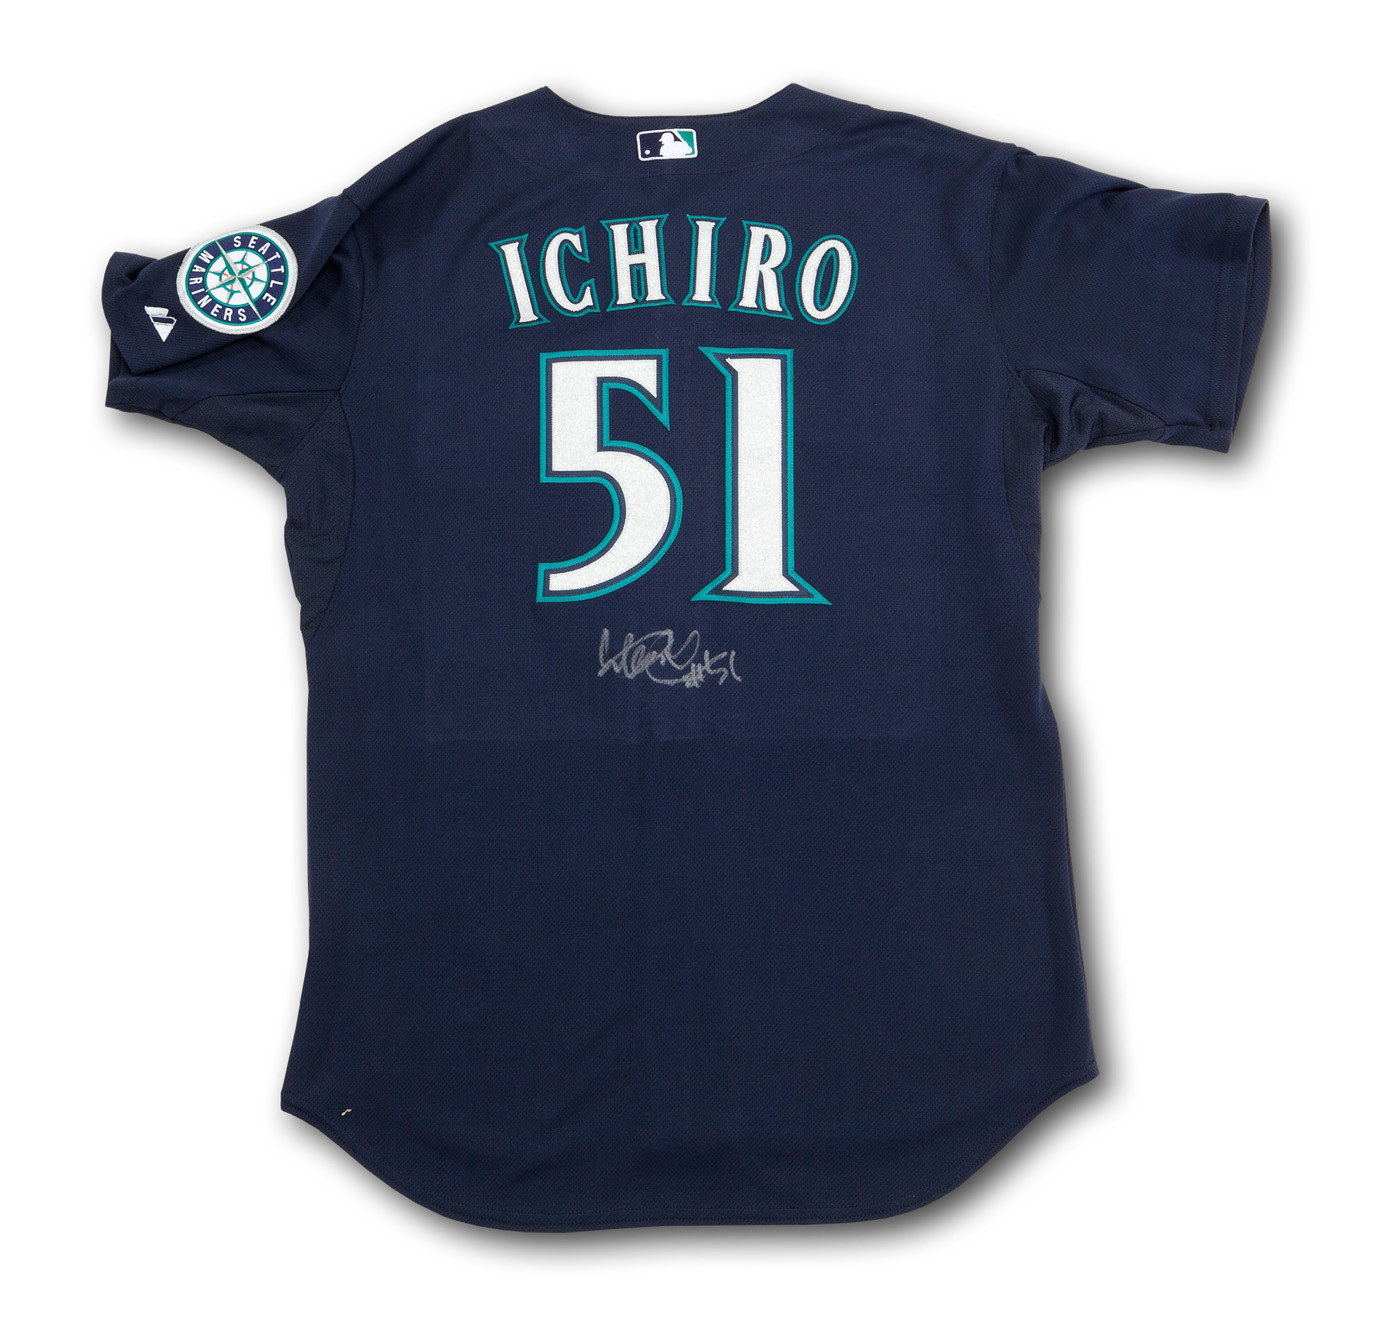 Ichiro Suzuki Signed Authentic Majestic 2009 All Star Game Jersey